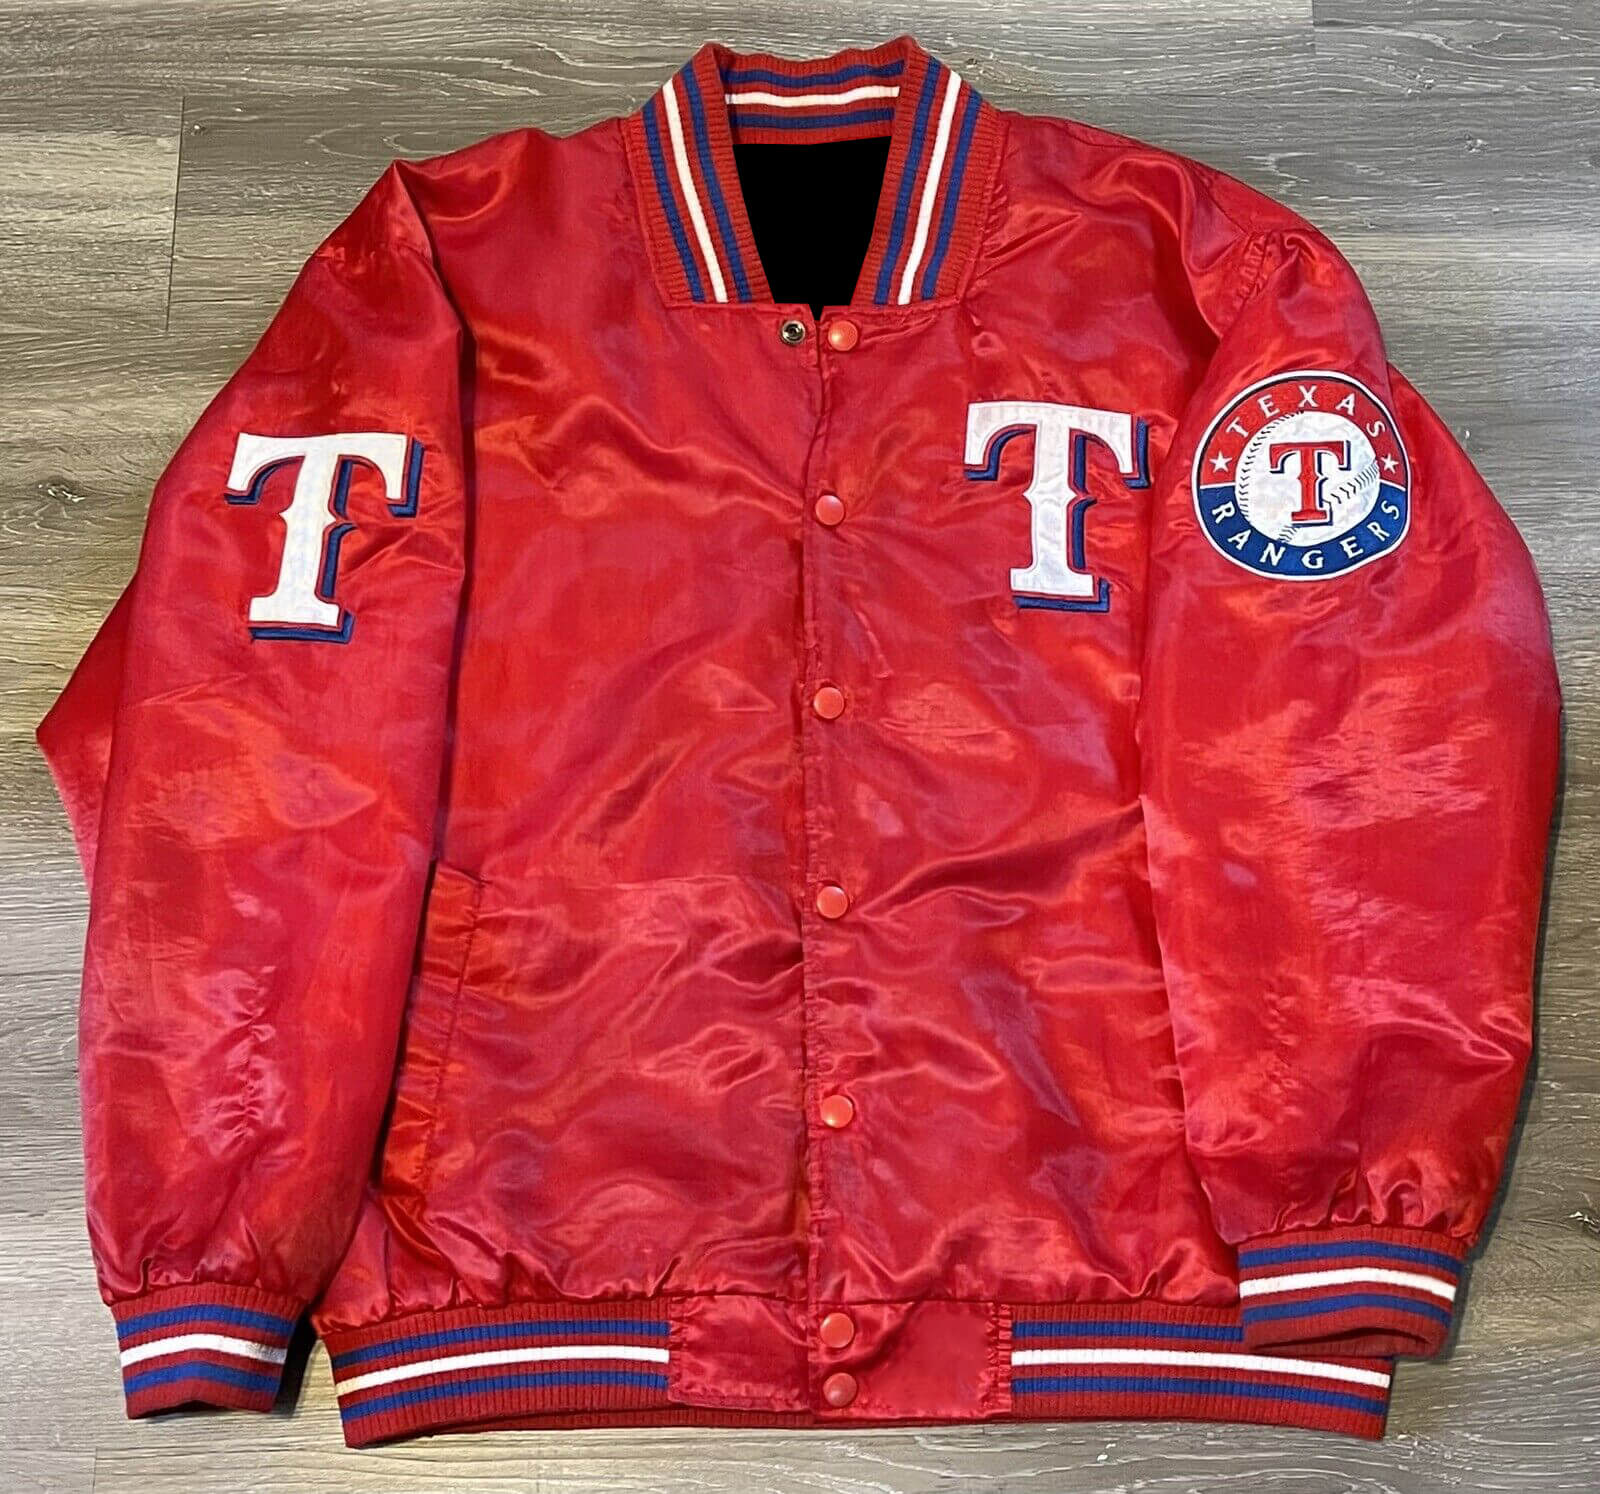 MLB Texas Rangers Royal Blue And Red Satin Jacket - Maker of Jacket